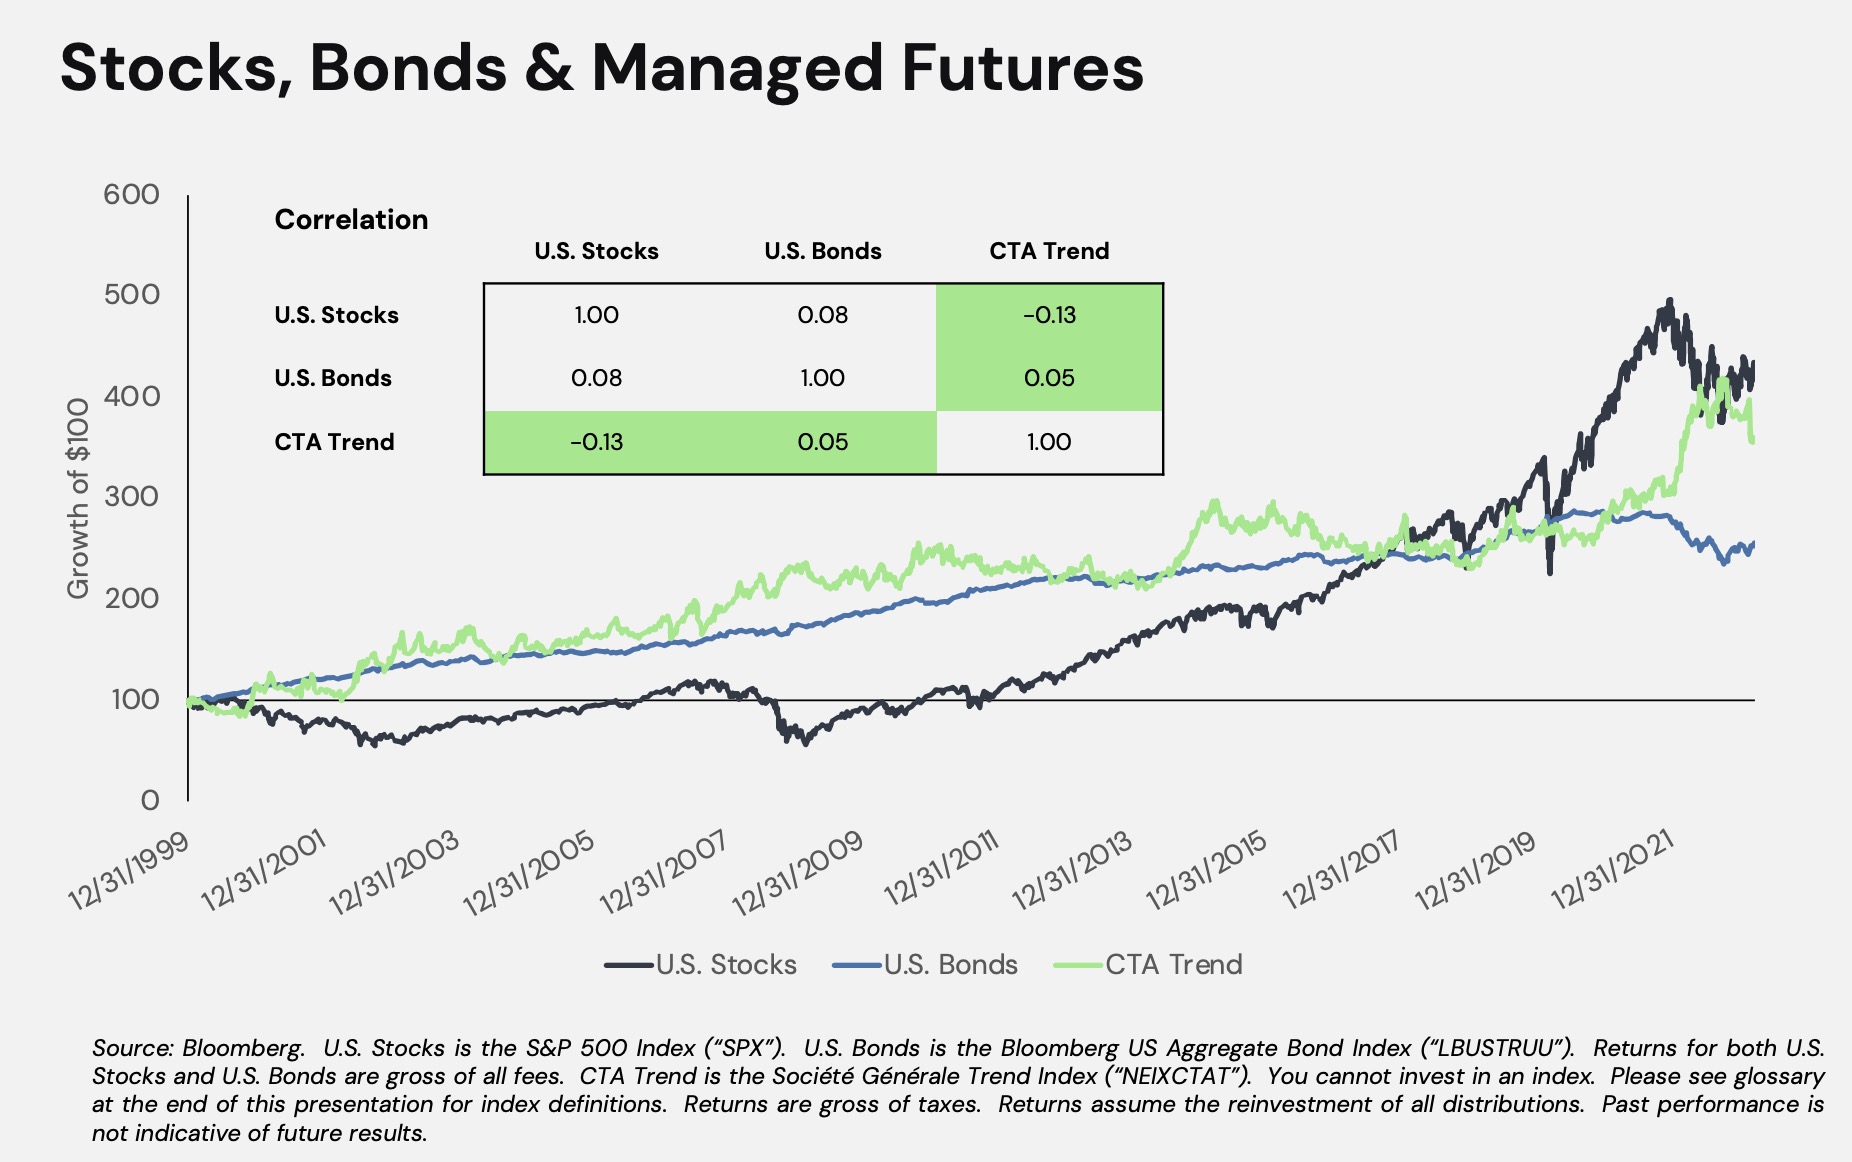 Stocks, Bonds & Managed Futures correlations, performance and volatility 